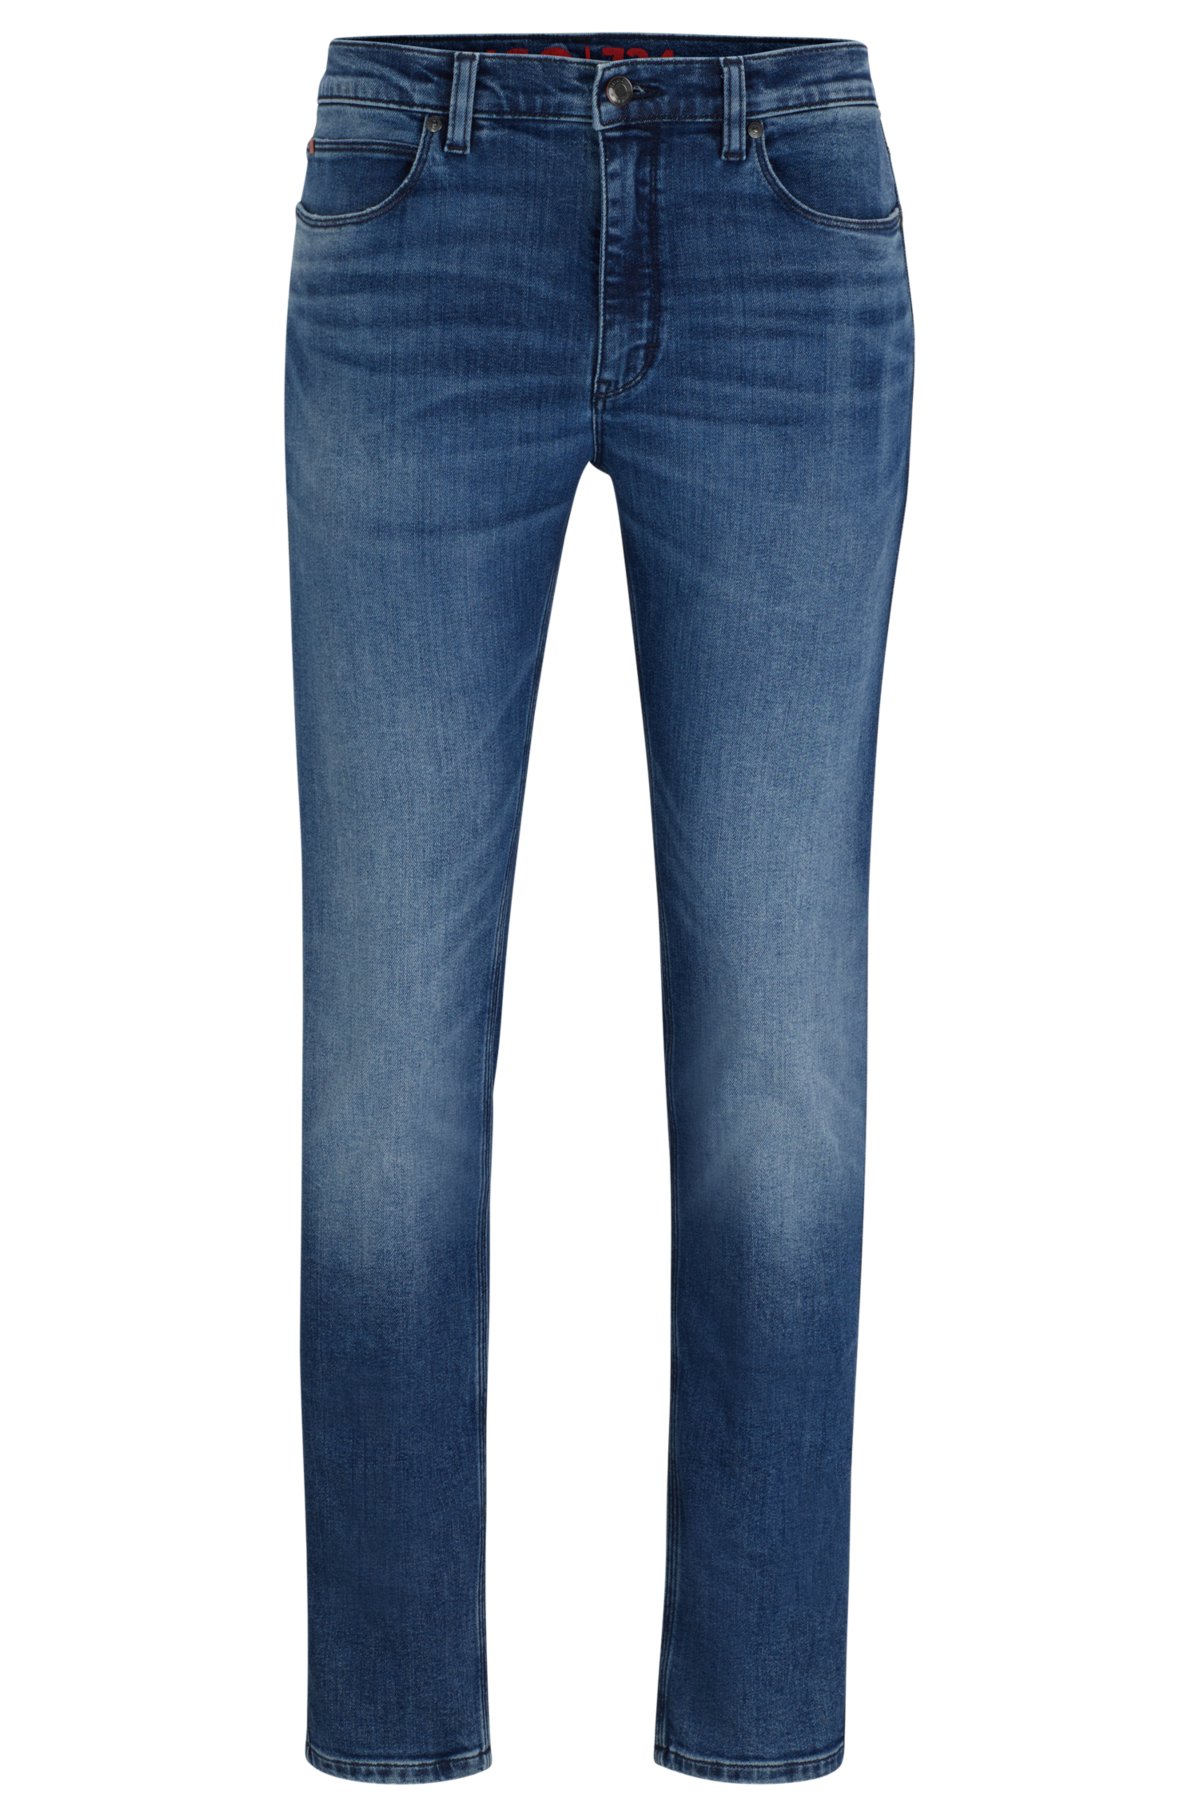 HUGO - Extra-slim-fit jeans in blue comfort-stretch denim